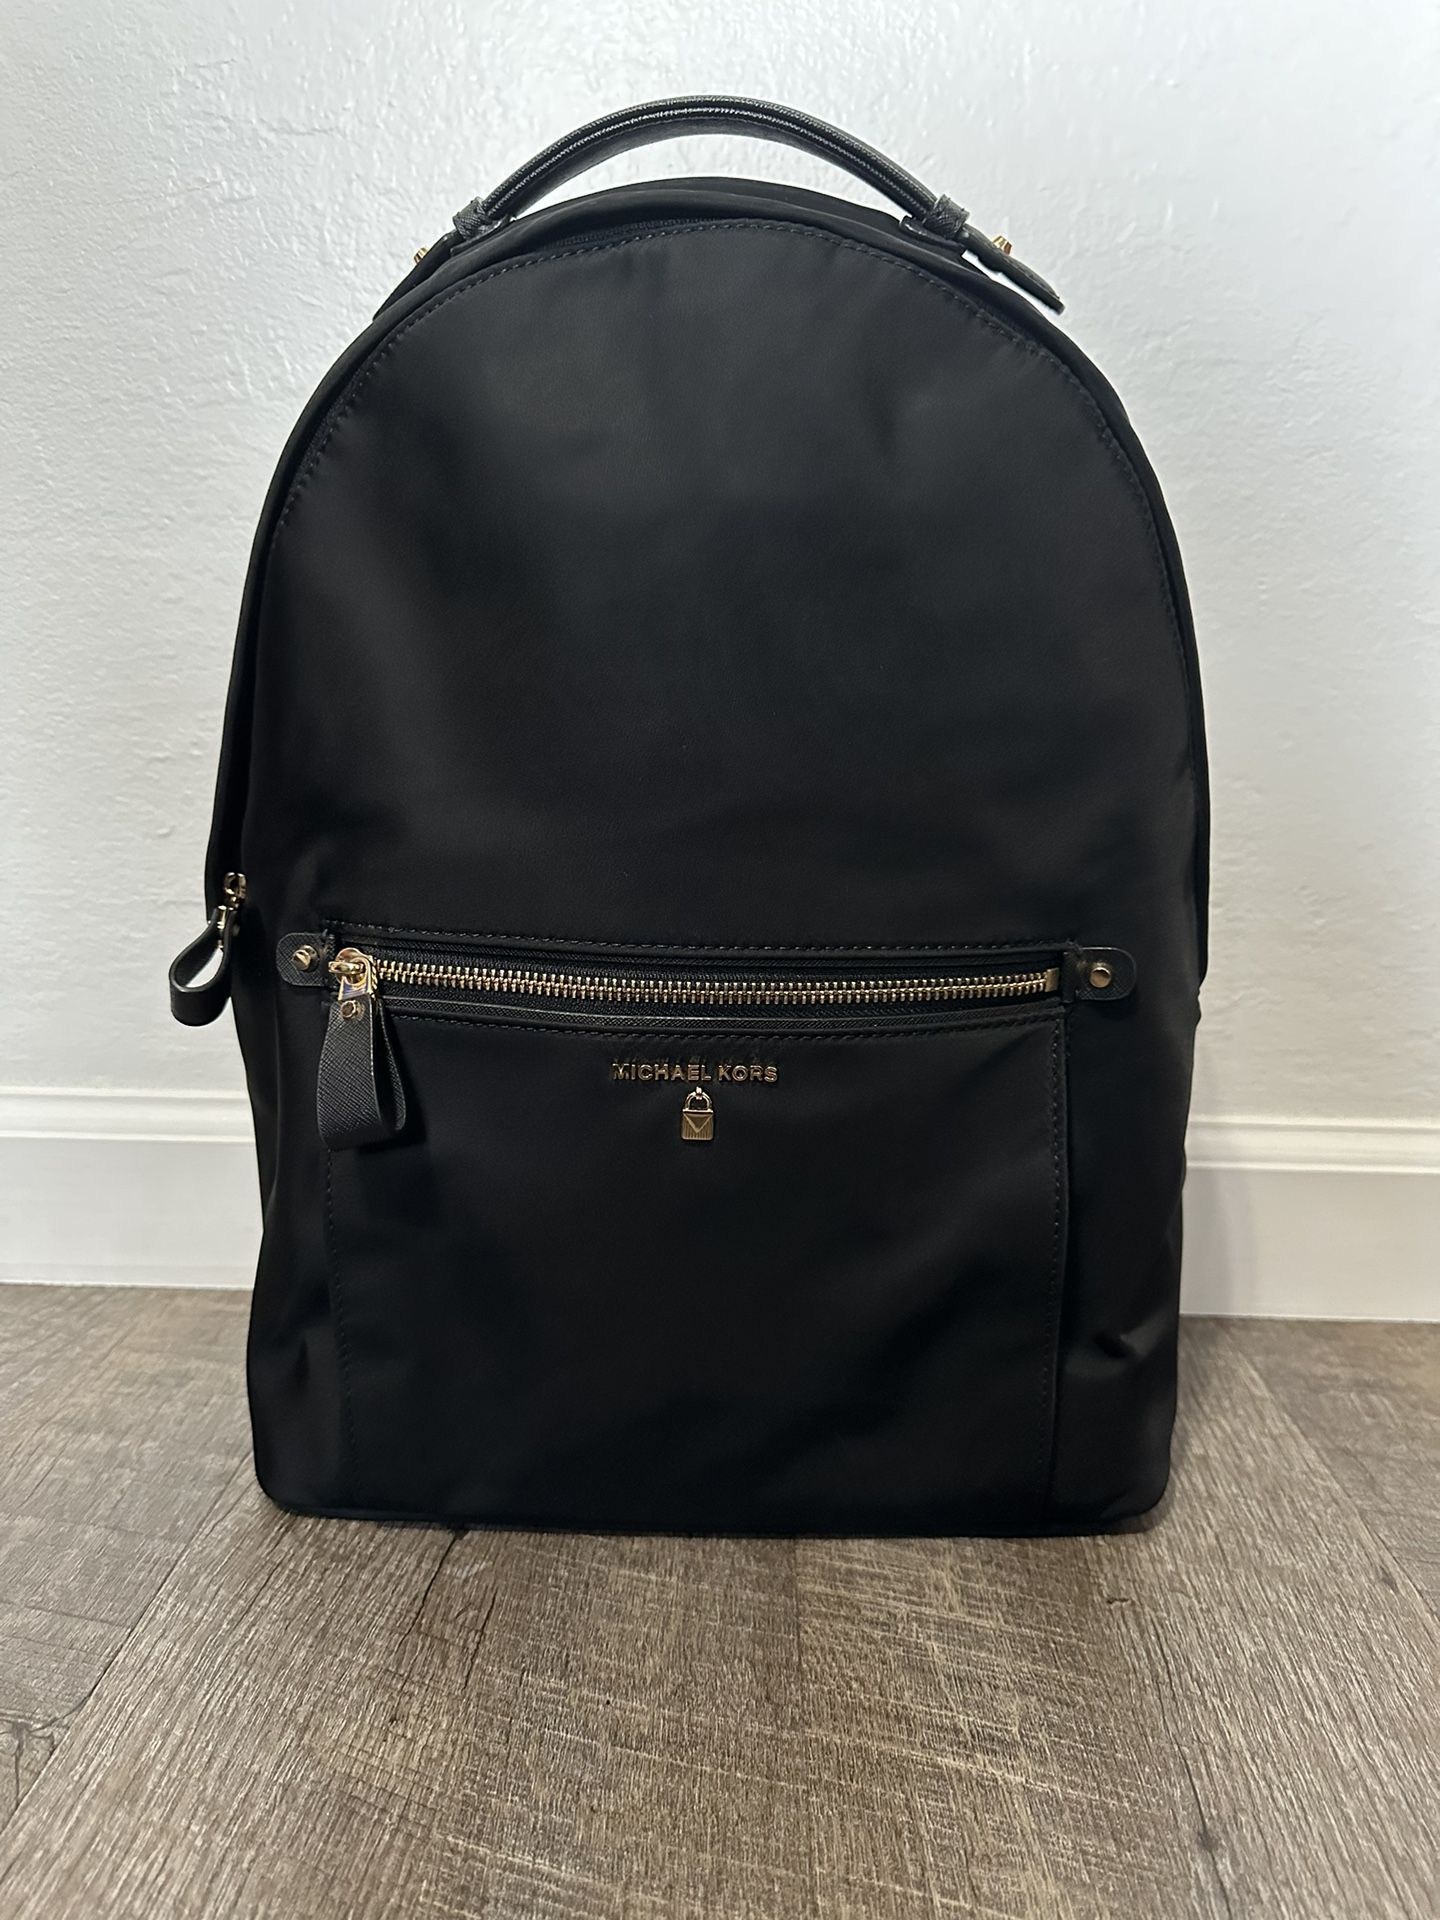 Michael Kors Travel Backpack and Belt Bag